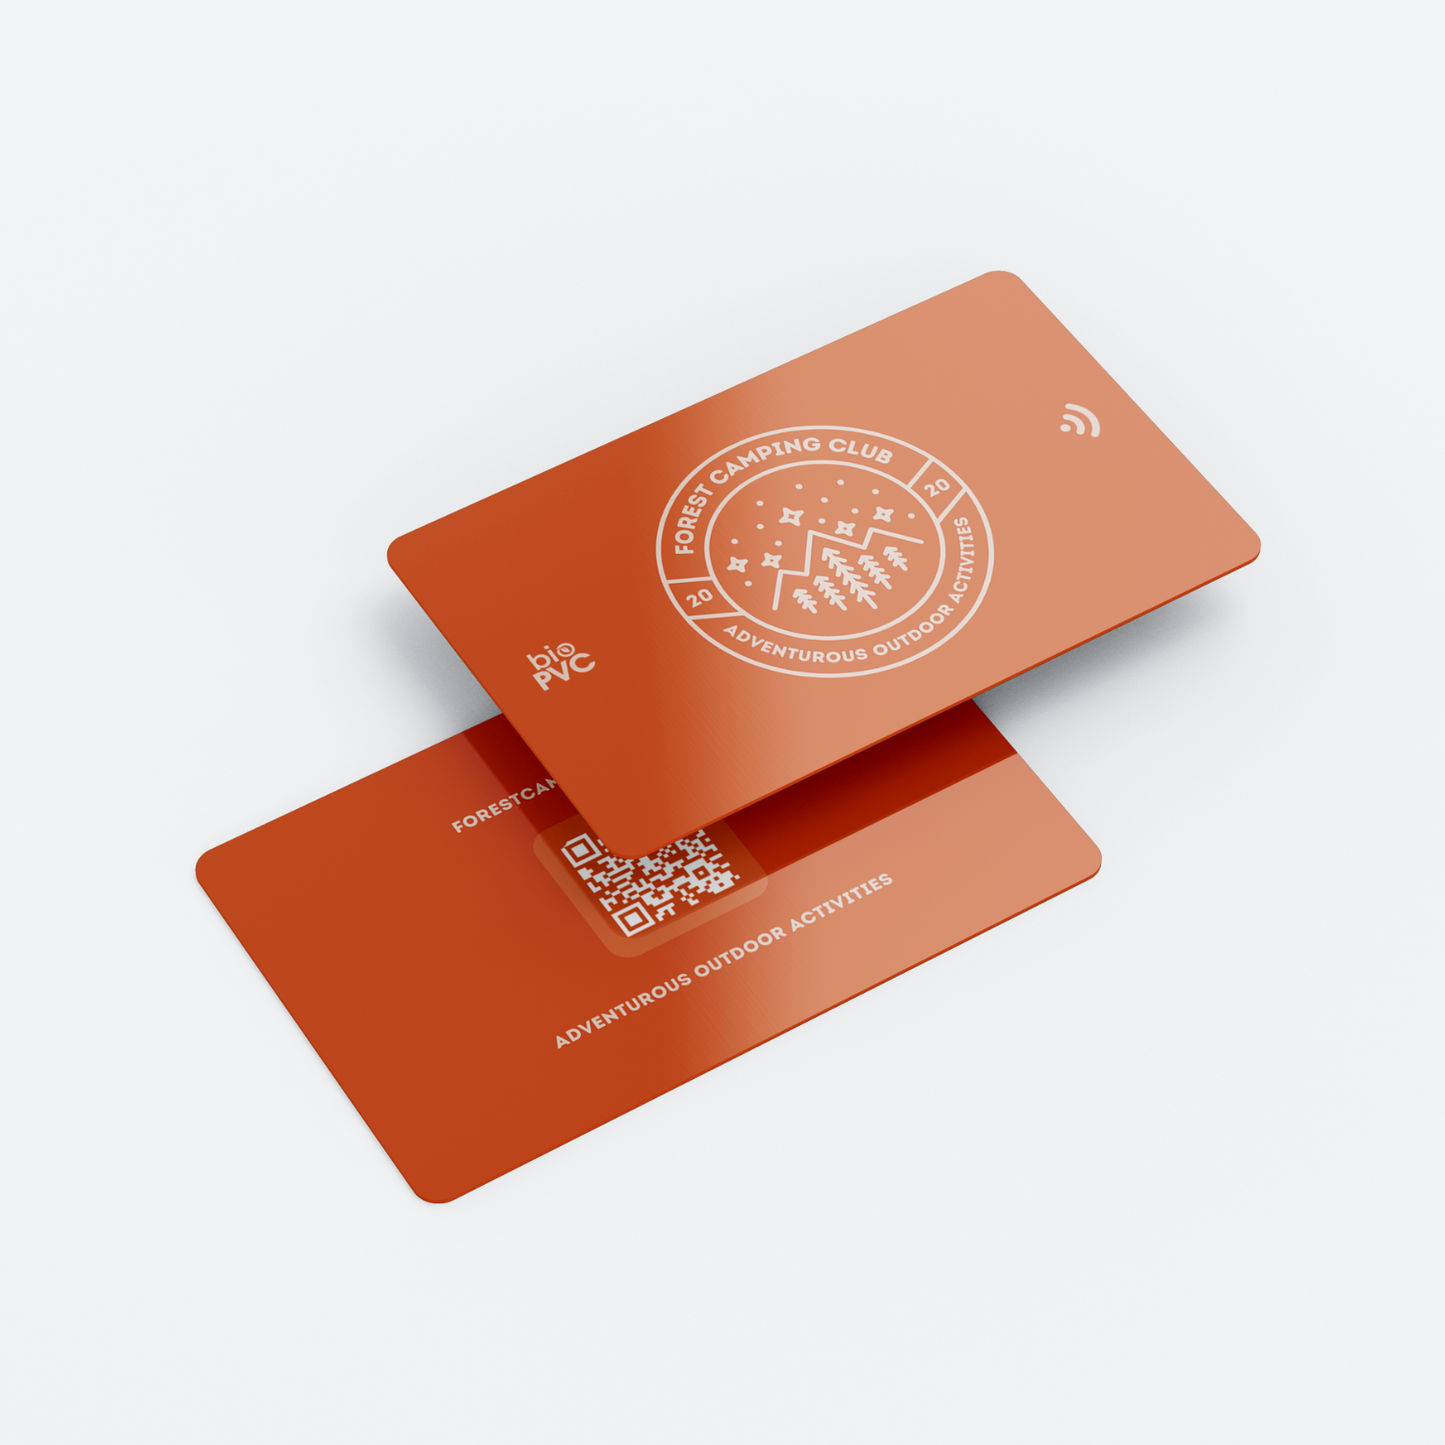 100% Personalizada - Tarjeta de visita bioPVC NFC + tarjeta digital | Compatible universal | Sin app